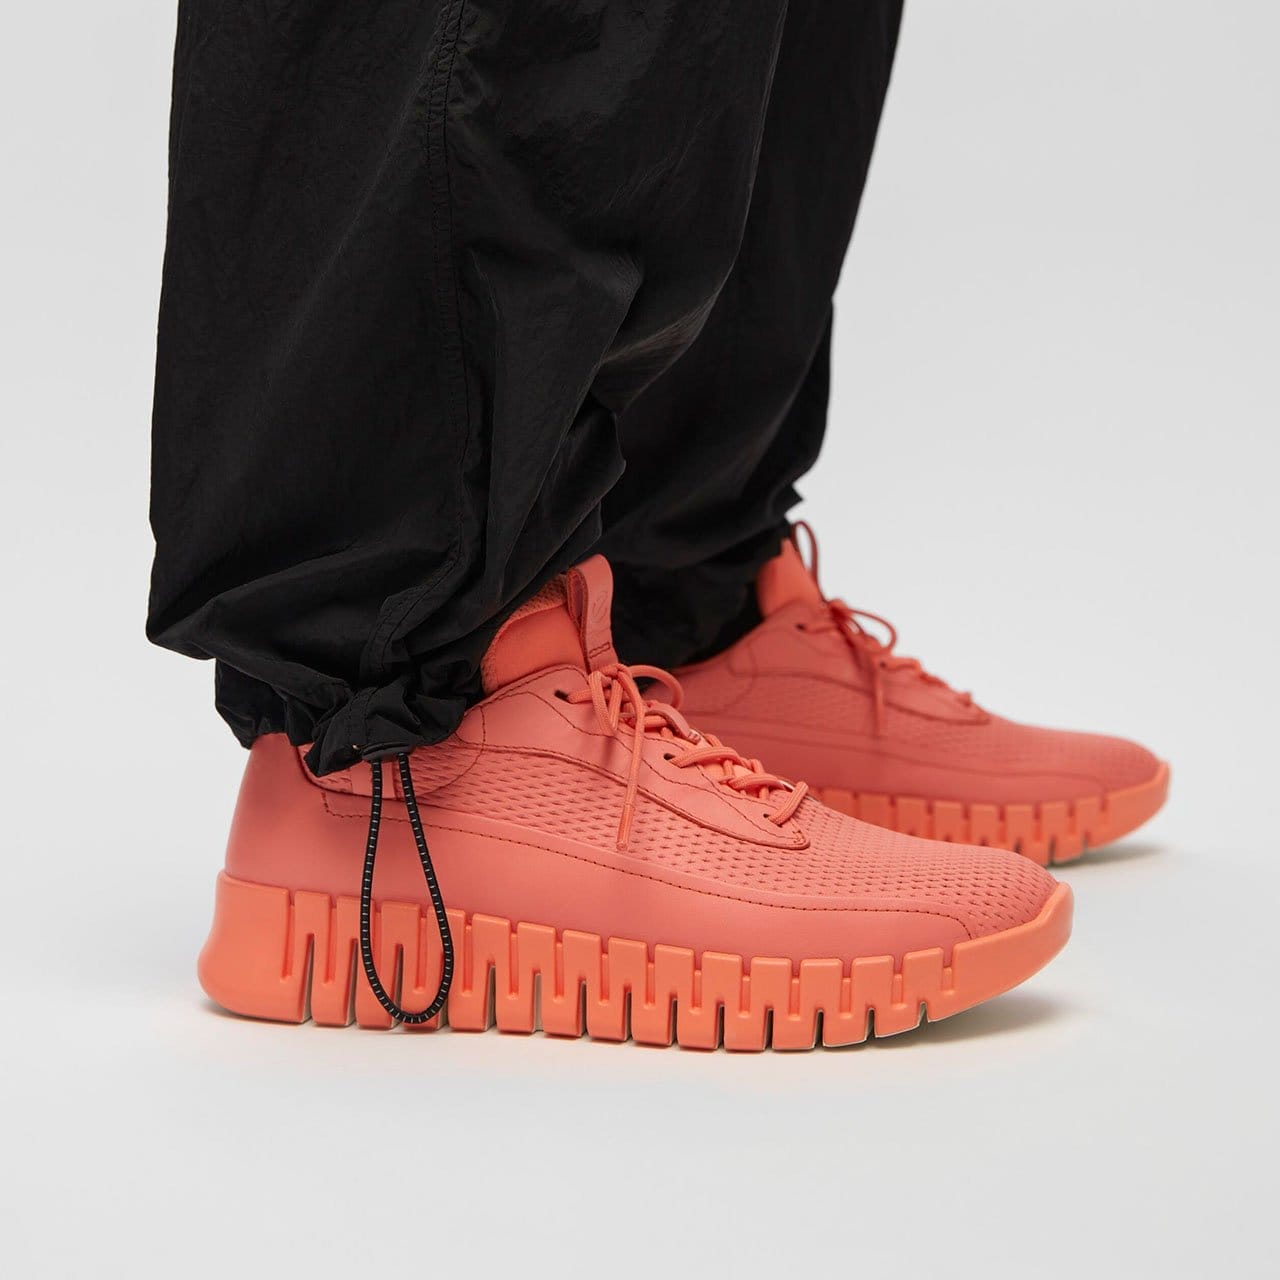 Model wearing orange sneakers